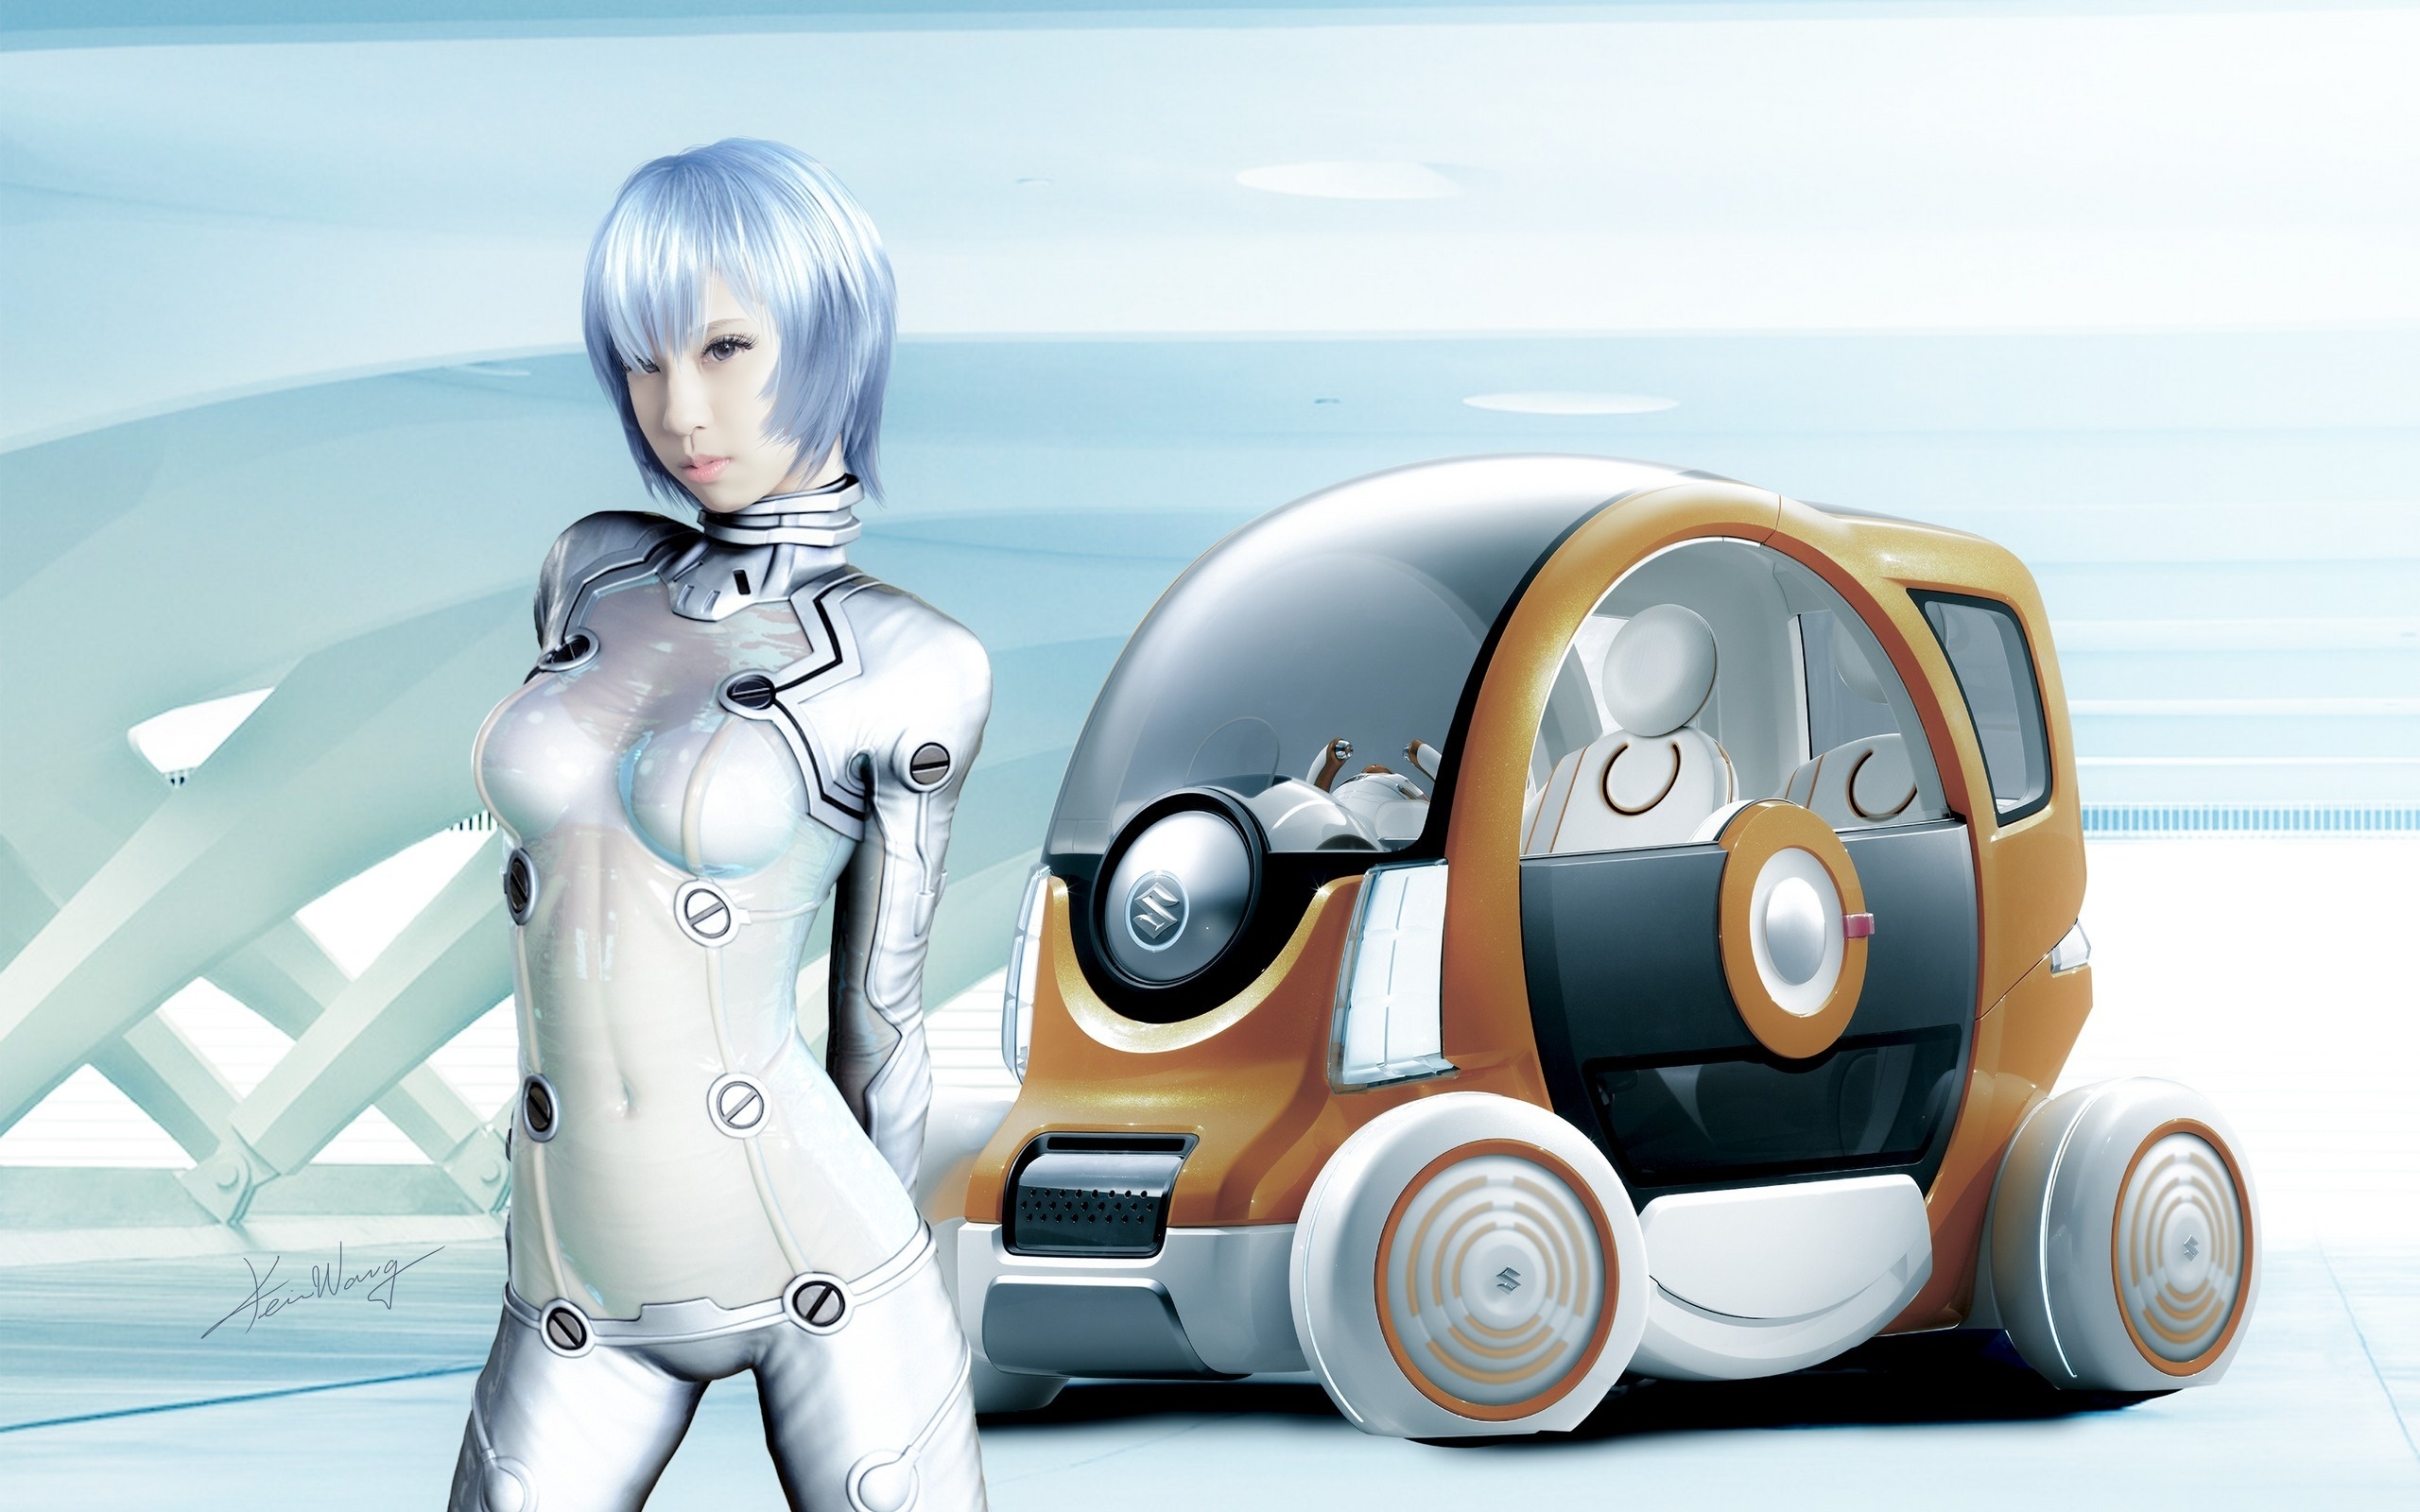 suzuki, Concept, Cyborg, Robot, Girl, Sci fi Wallpapers HD / Desktop and Mo...